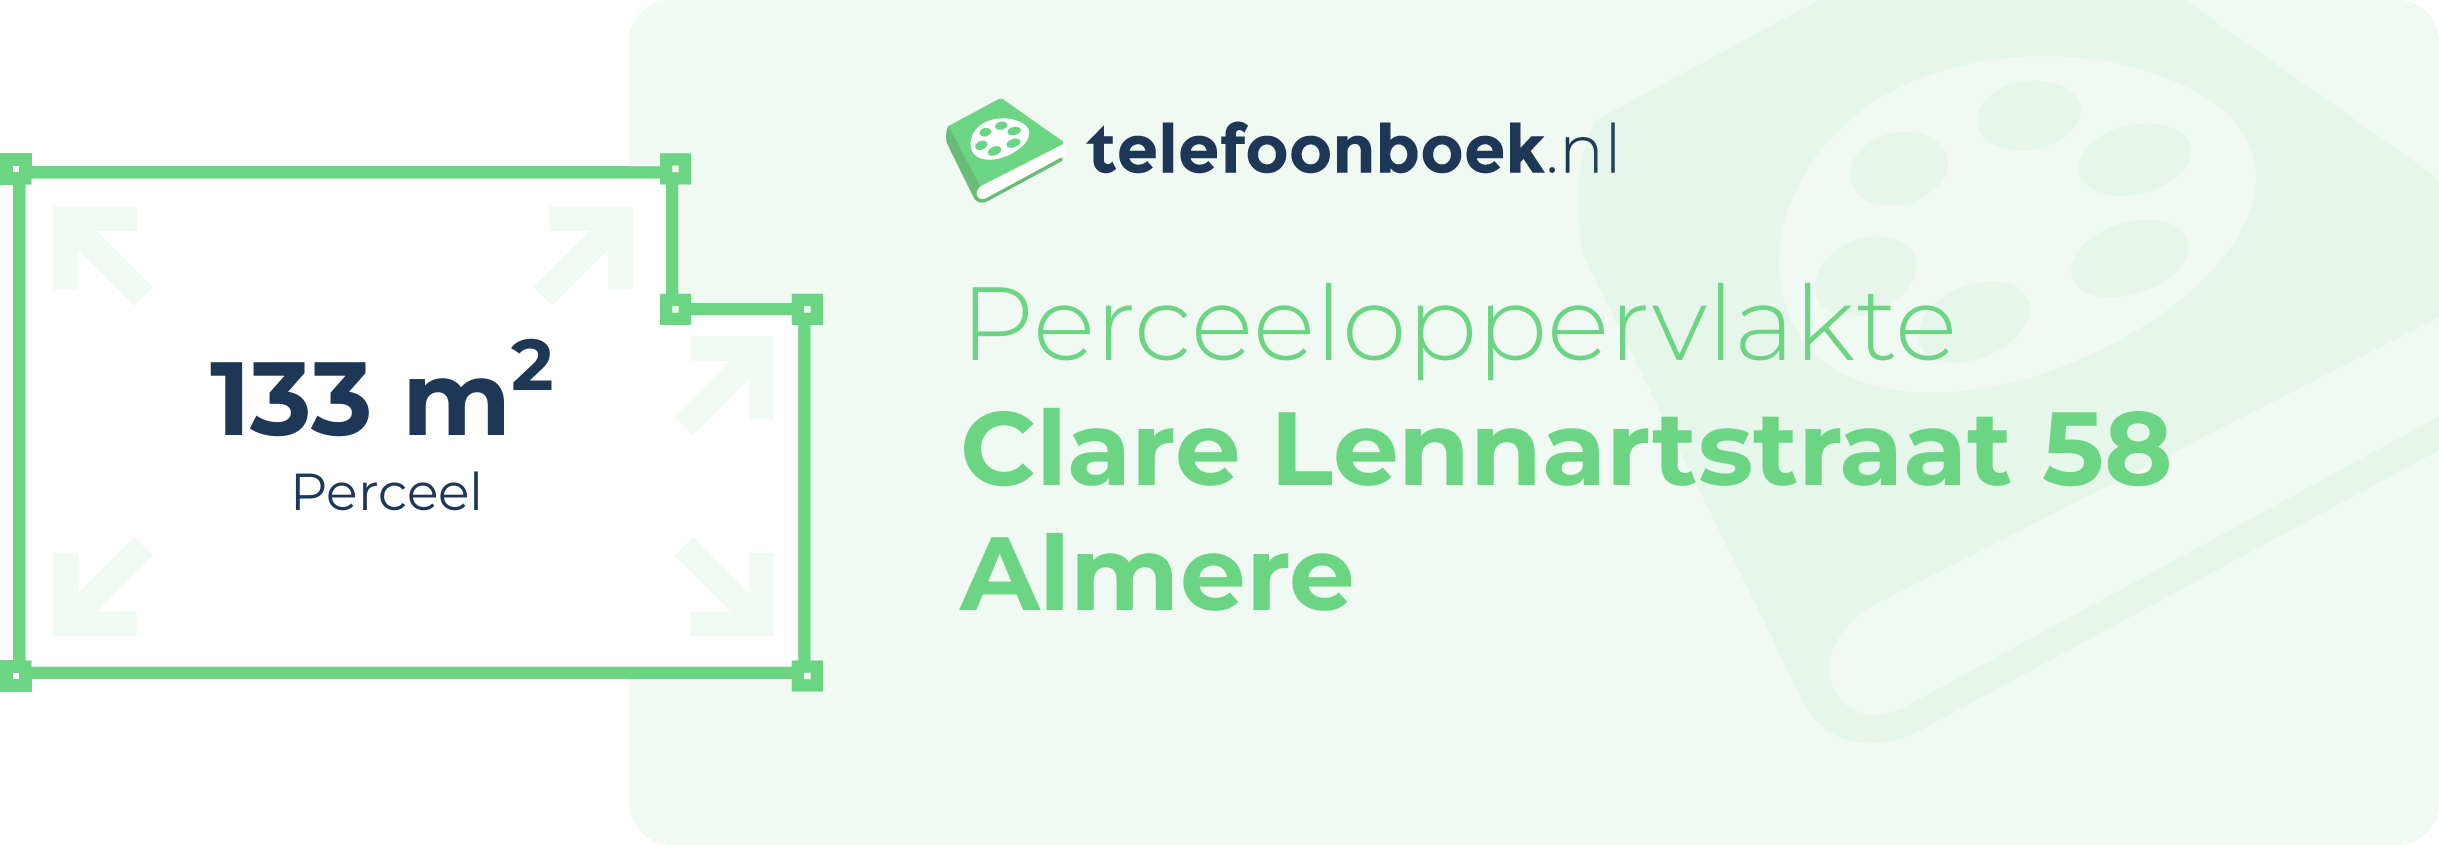 Perceeloppervlakte Clare Lennartstraat 58 Almere